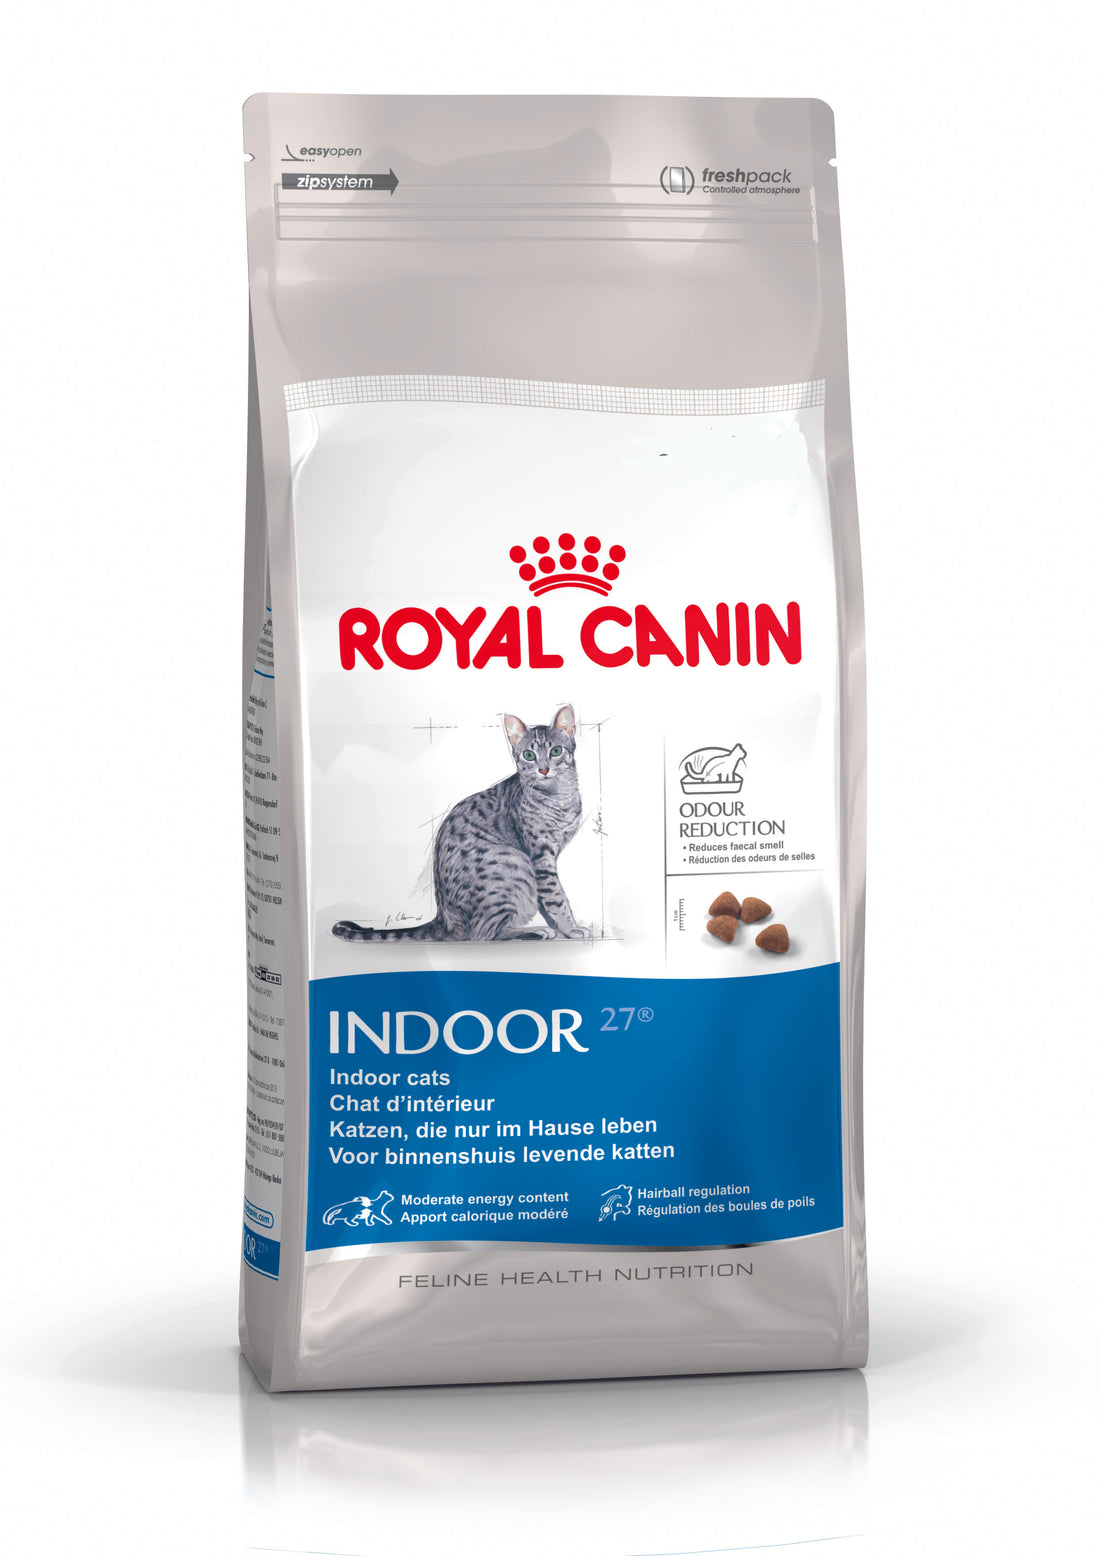 Royal Canin-Indoor Cat 27 Pet Food 400g